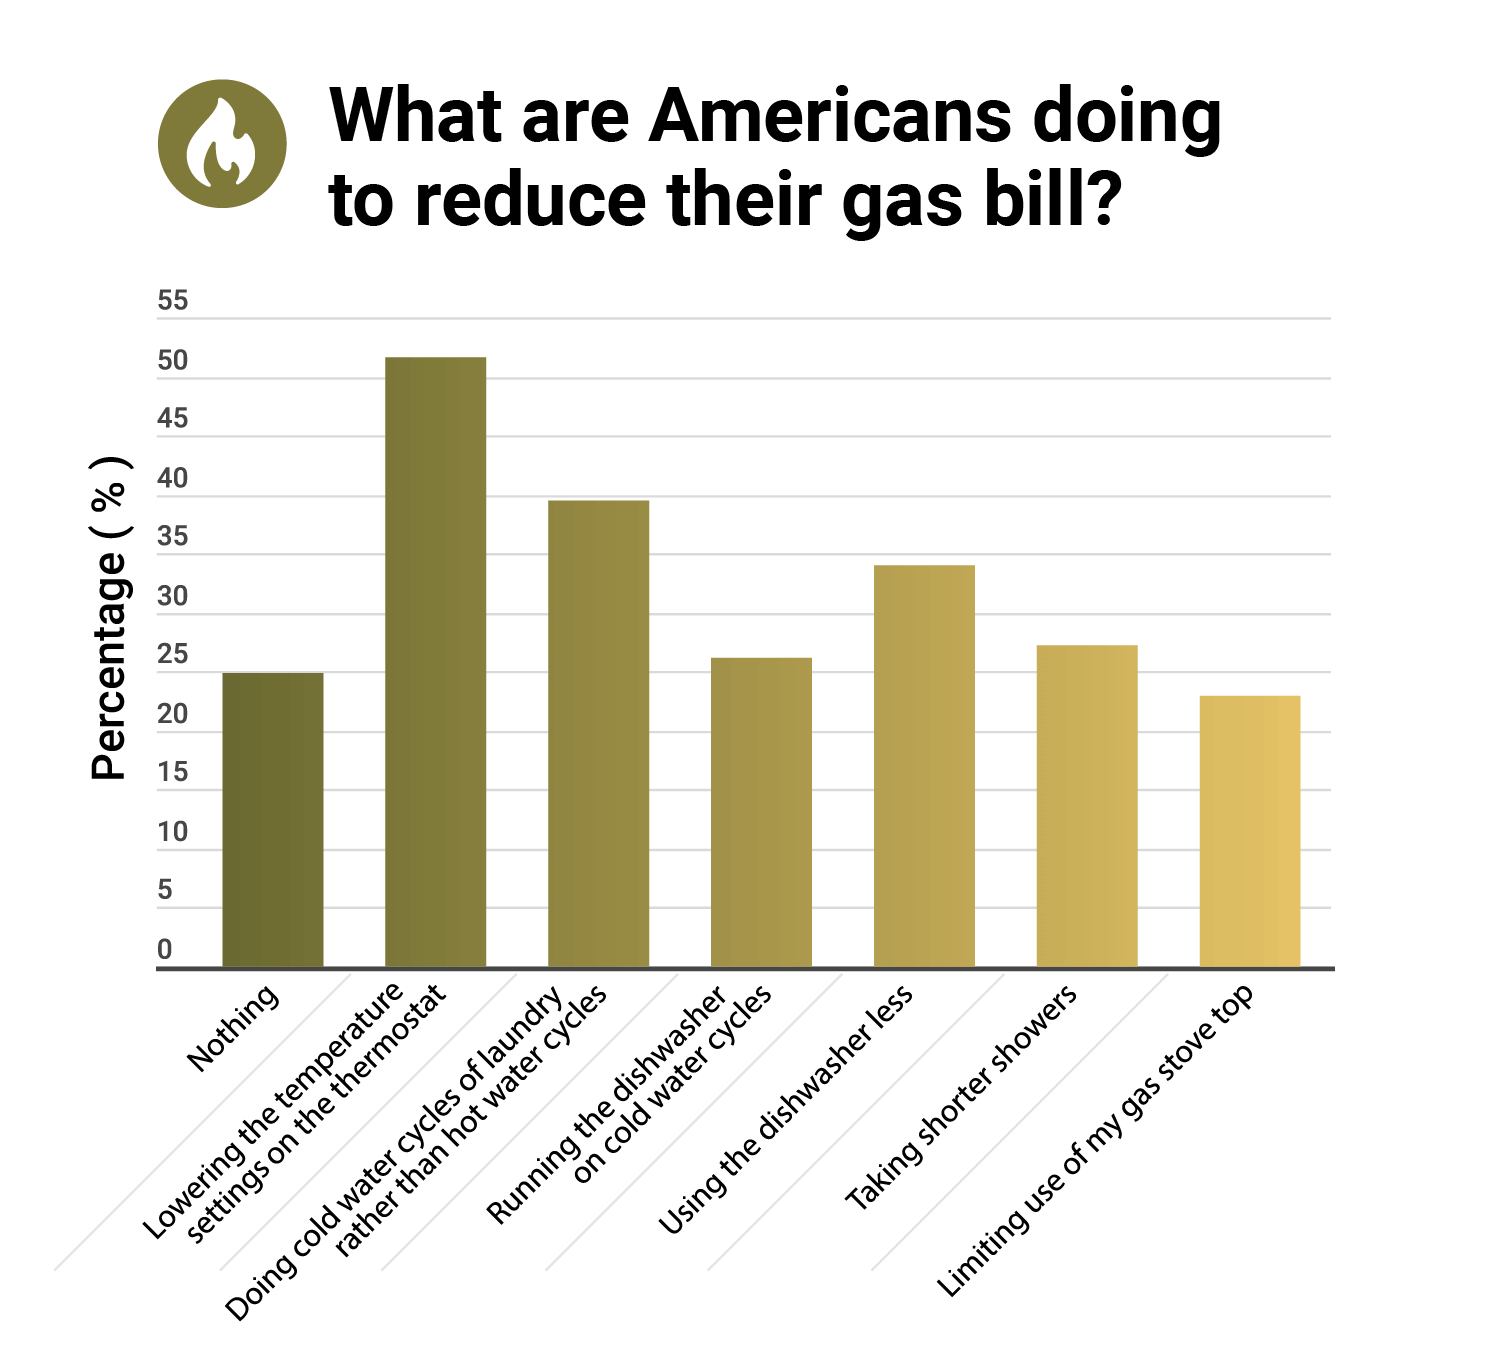 A bar chart showing how Americans combat gas bills